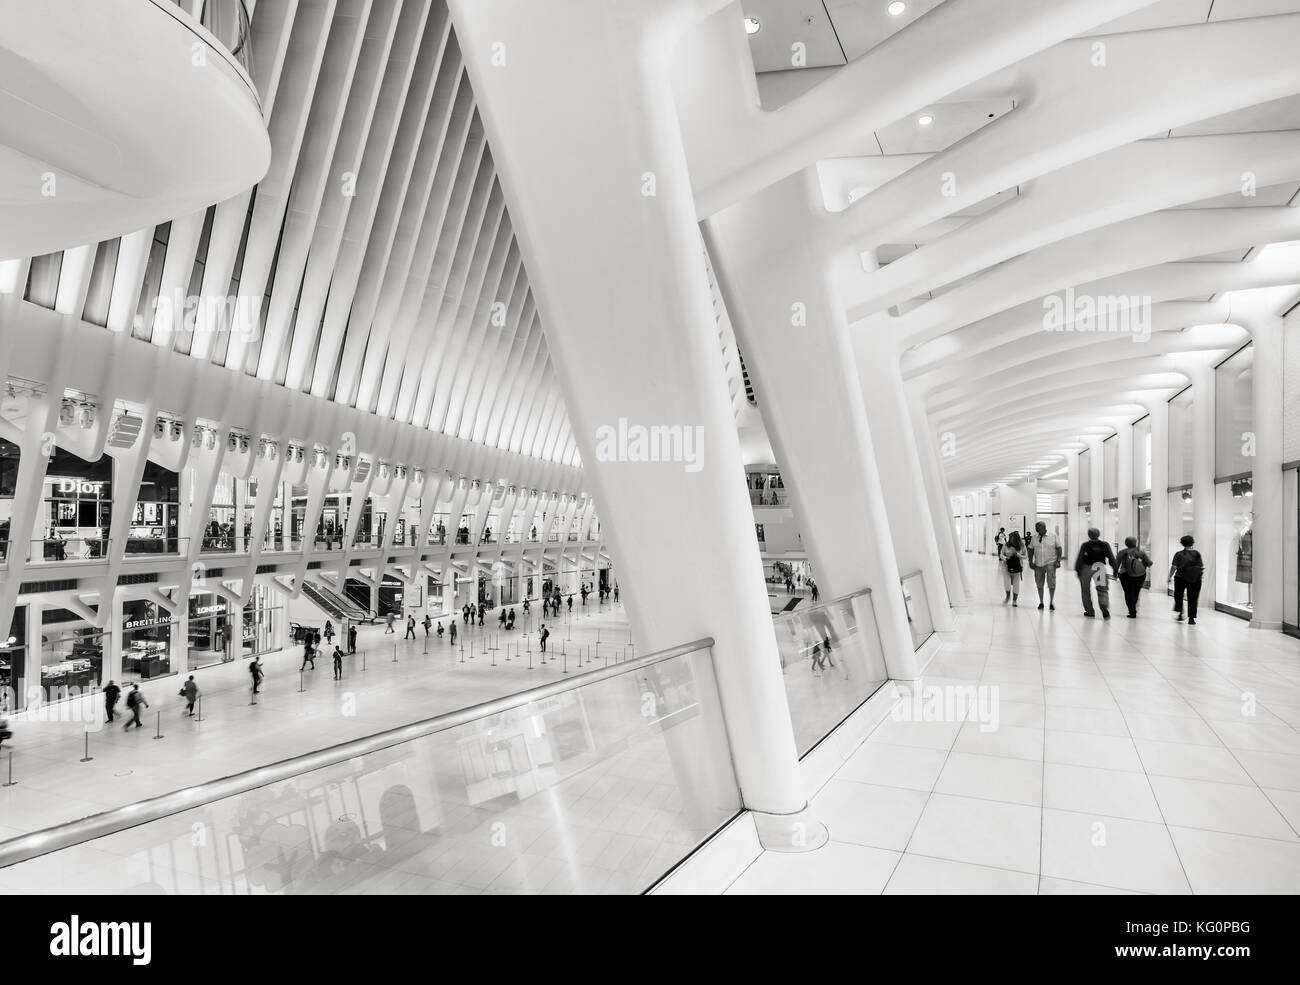 Interior view of the Oculus, Westfield World Trade Center in Black & White. Tranportation hub designed by Santiago Calatrava. New York City Stock Photo